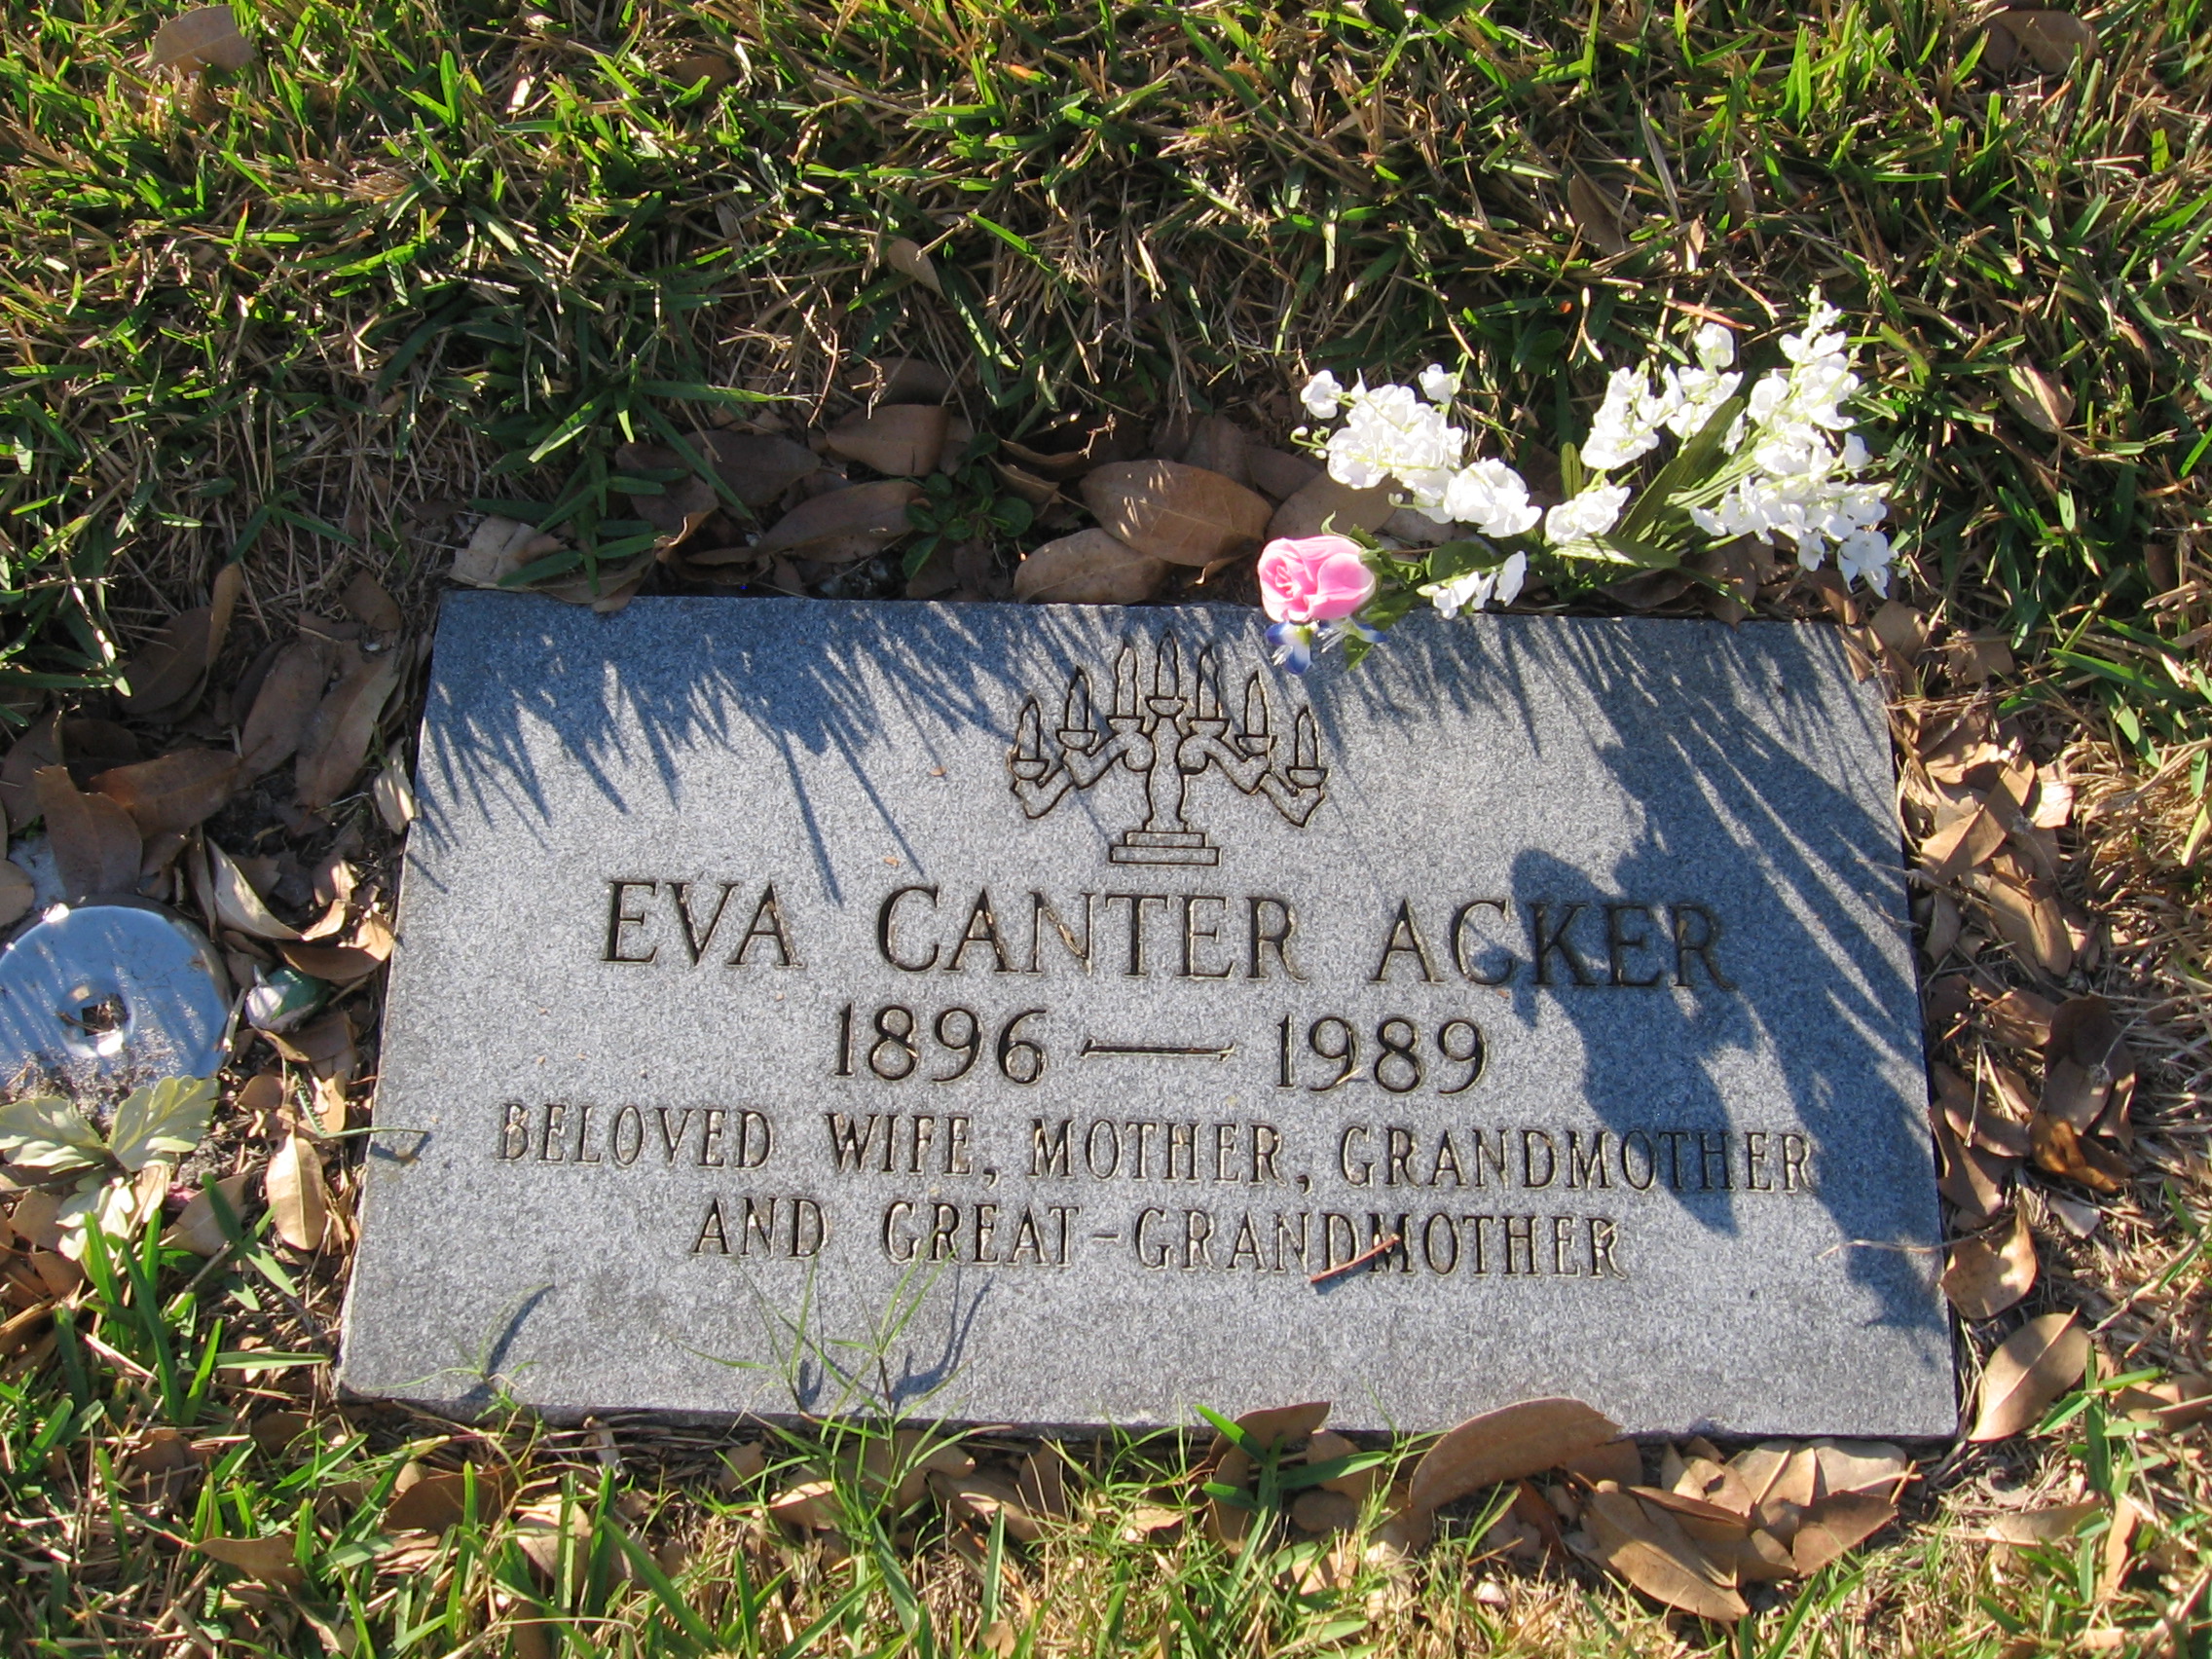 Eva Canter Acker